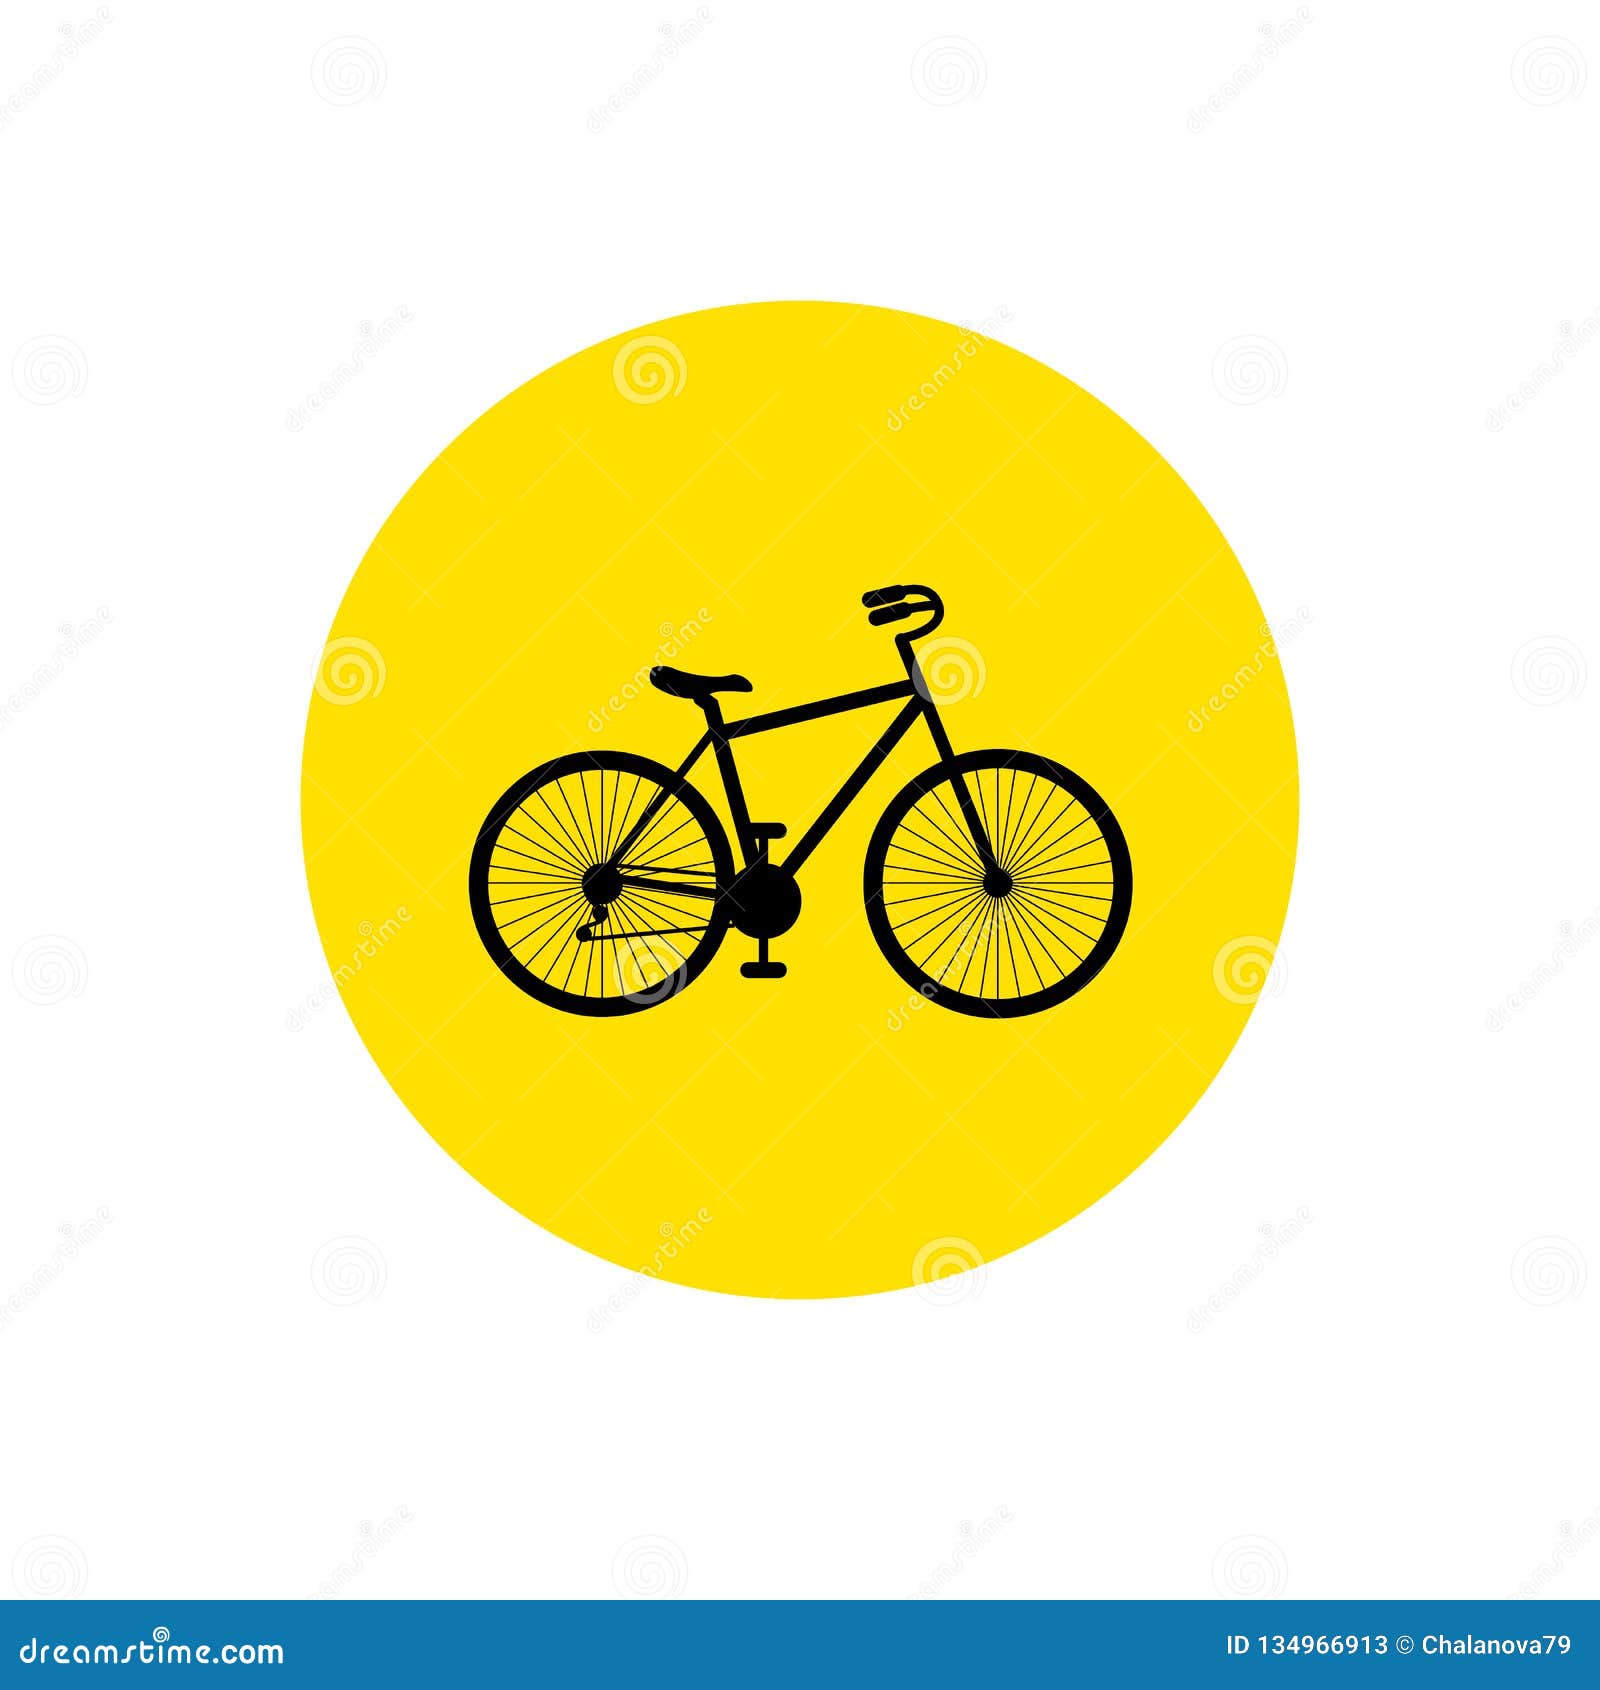 Bicycle. Bike Icon Vector. Bike Sign on Yellow Circle Isolated on White  Background Stock Illustration - Illustration of leisure, icon: 134966913